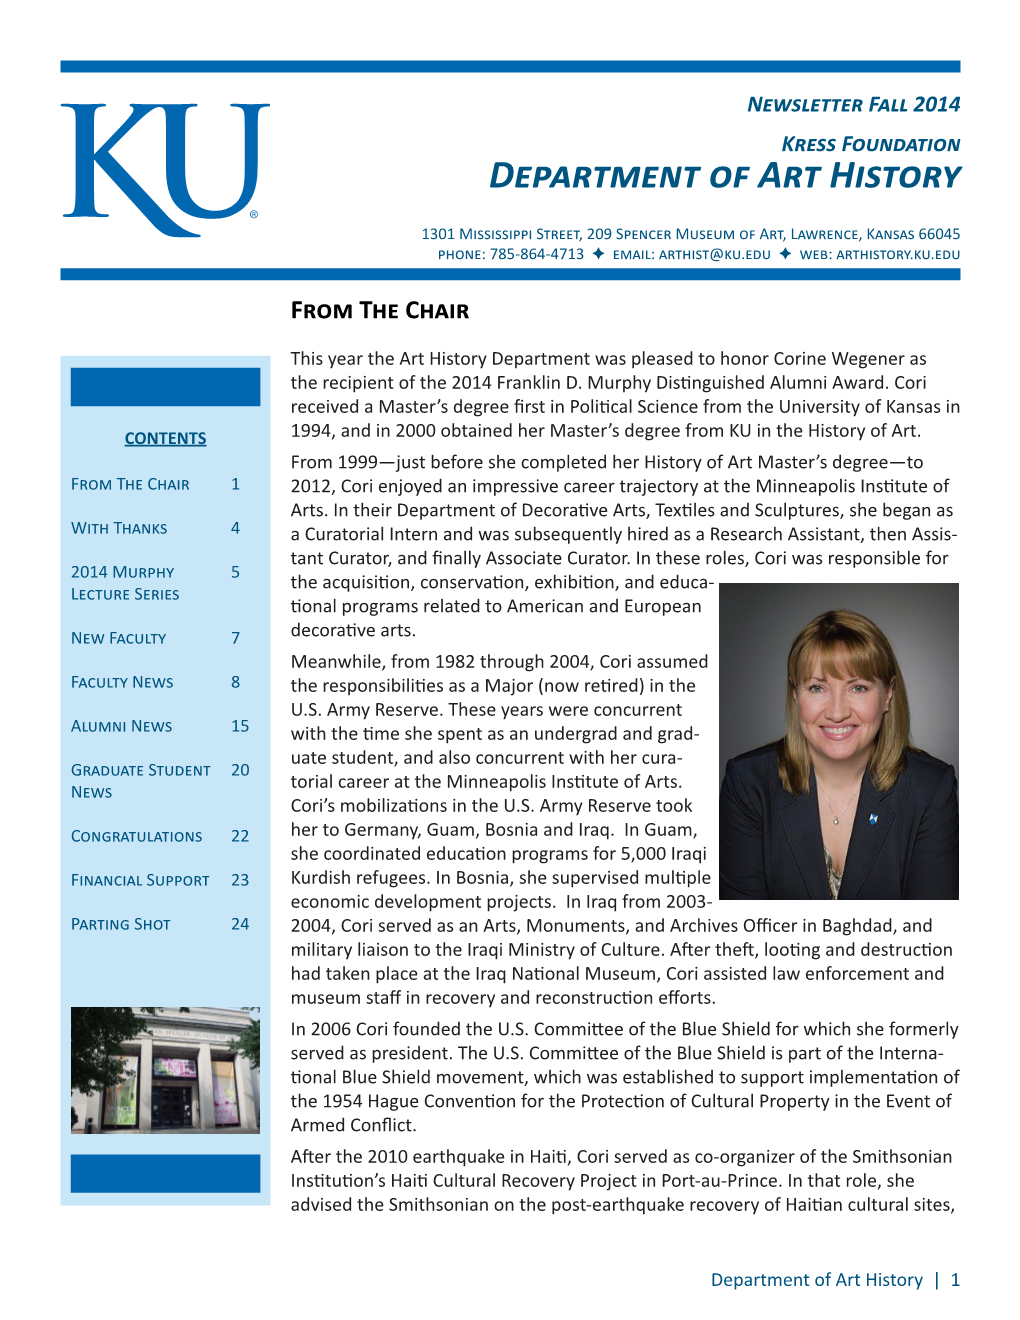 Fall 2014 Kress Foundation Department of Art History